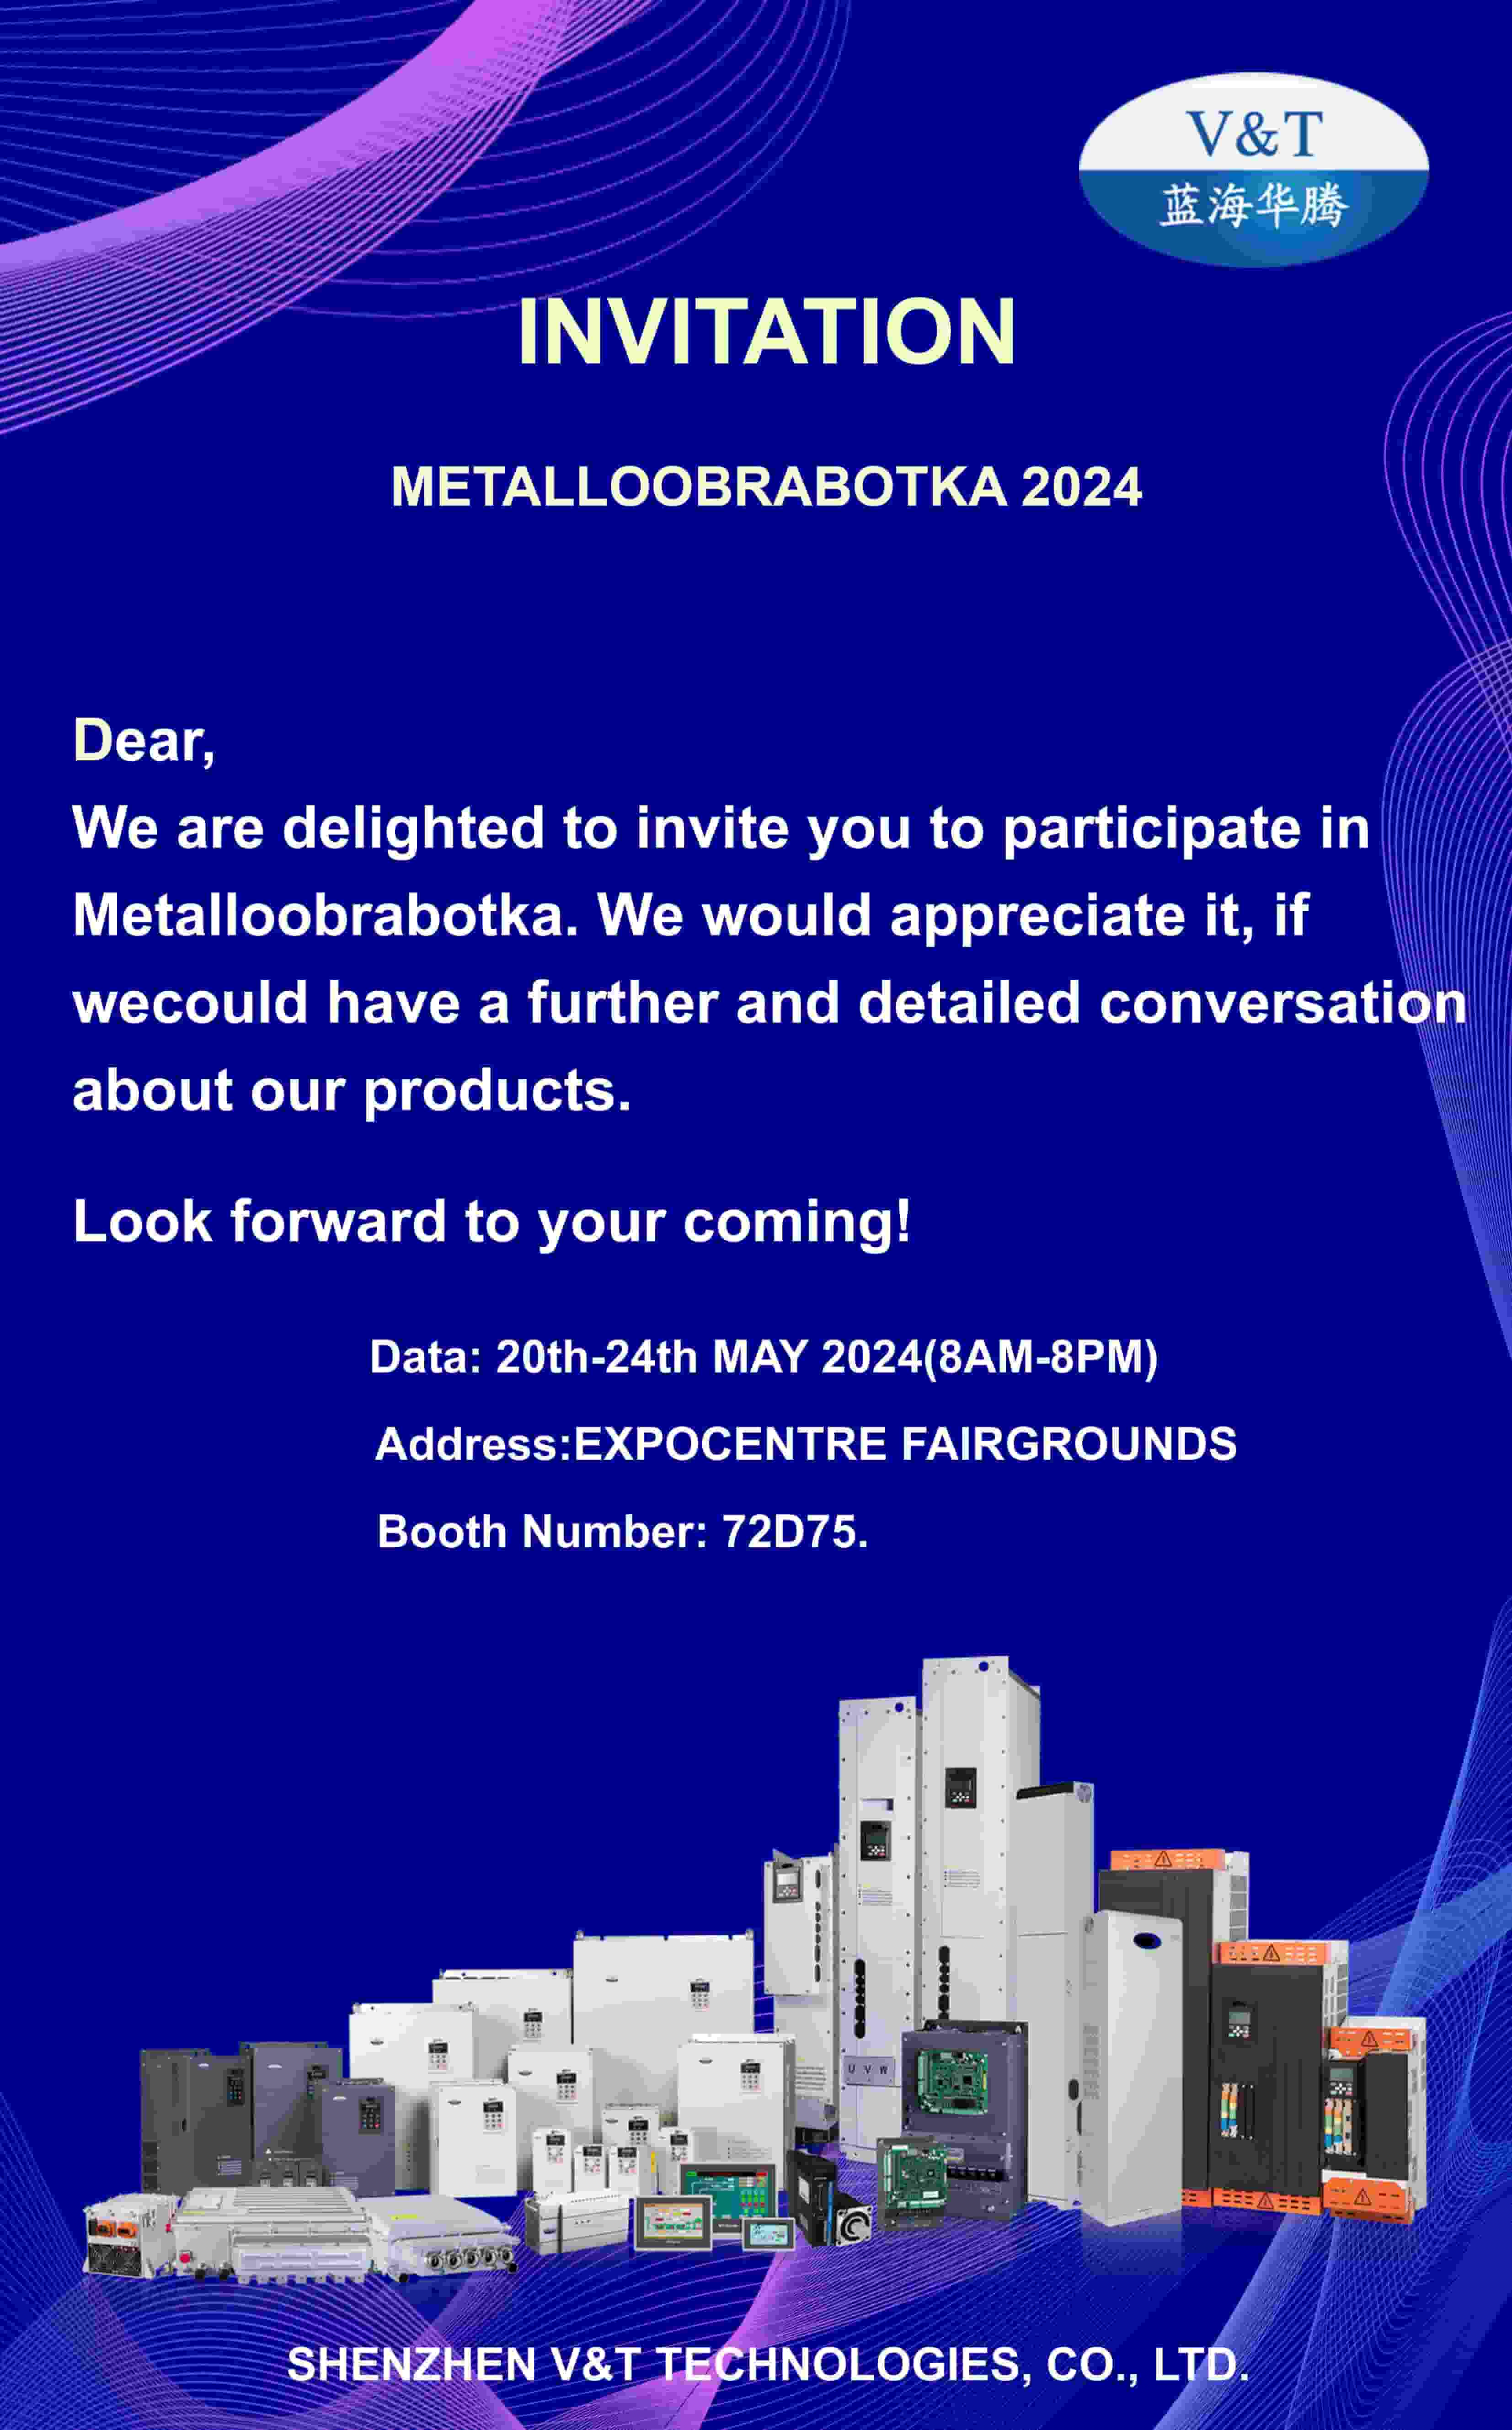 Visite la empresa V&T en METALOOBRABOTKA 2024